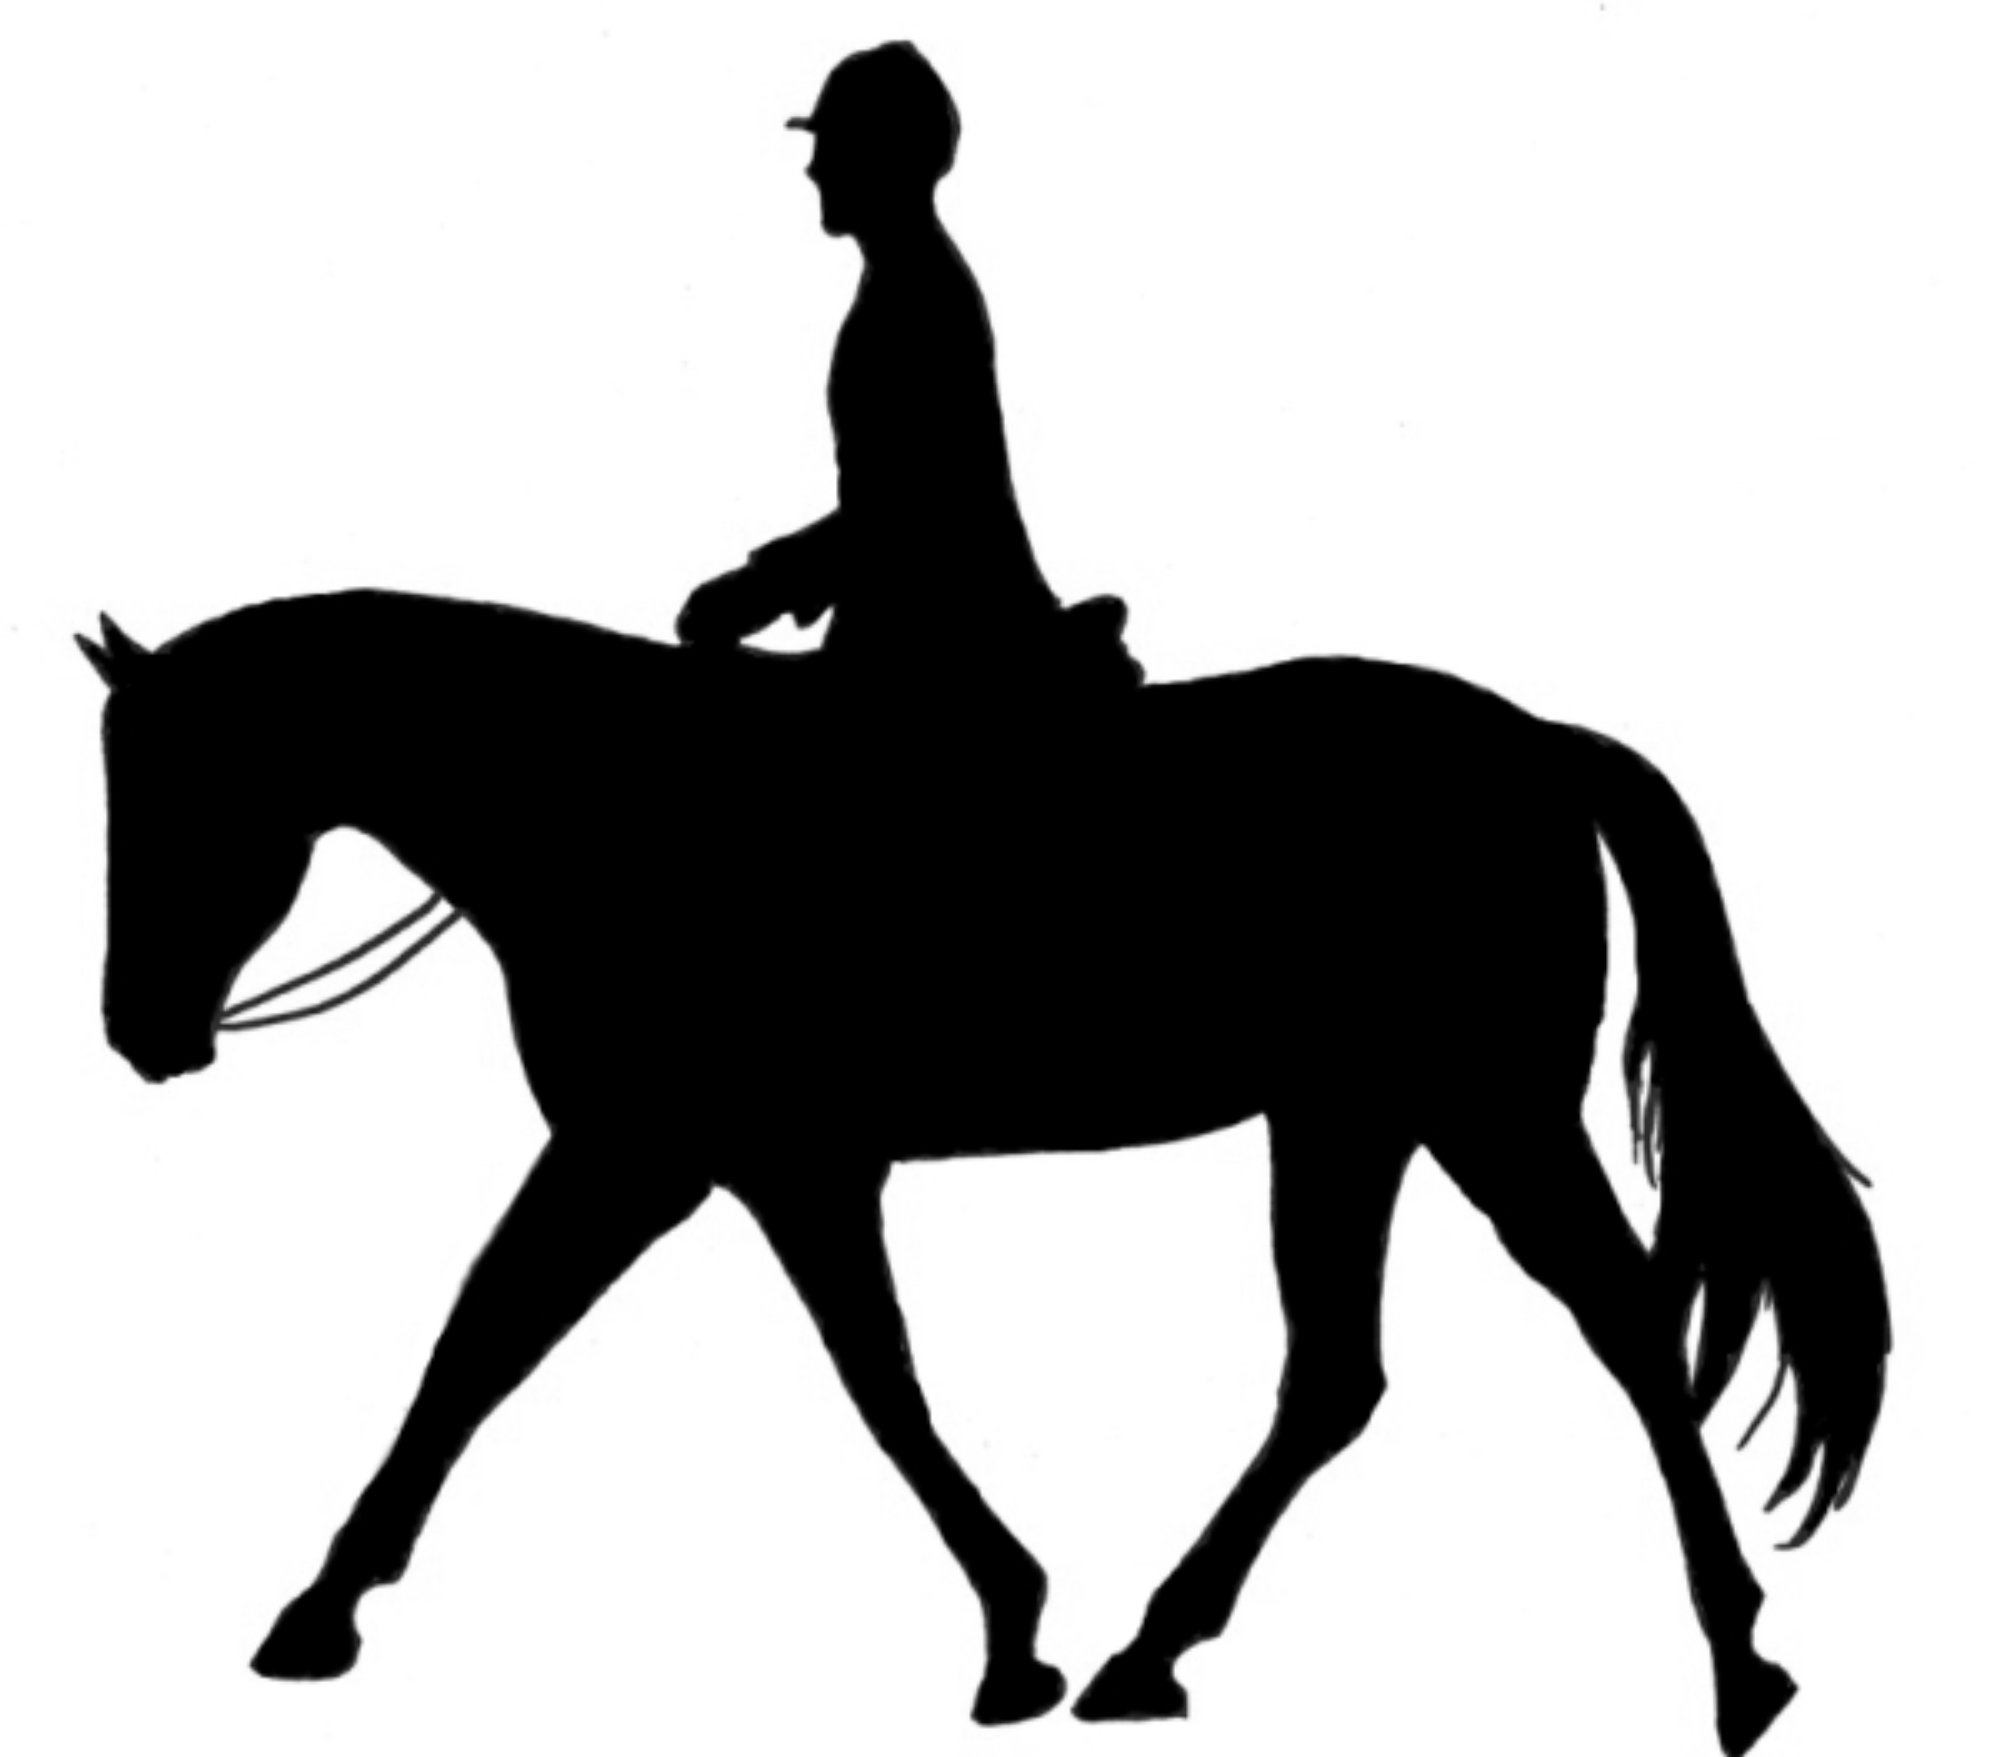 Horseback cliparts